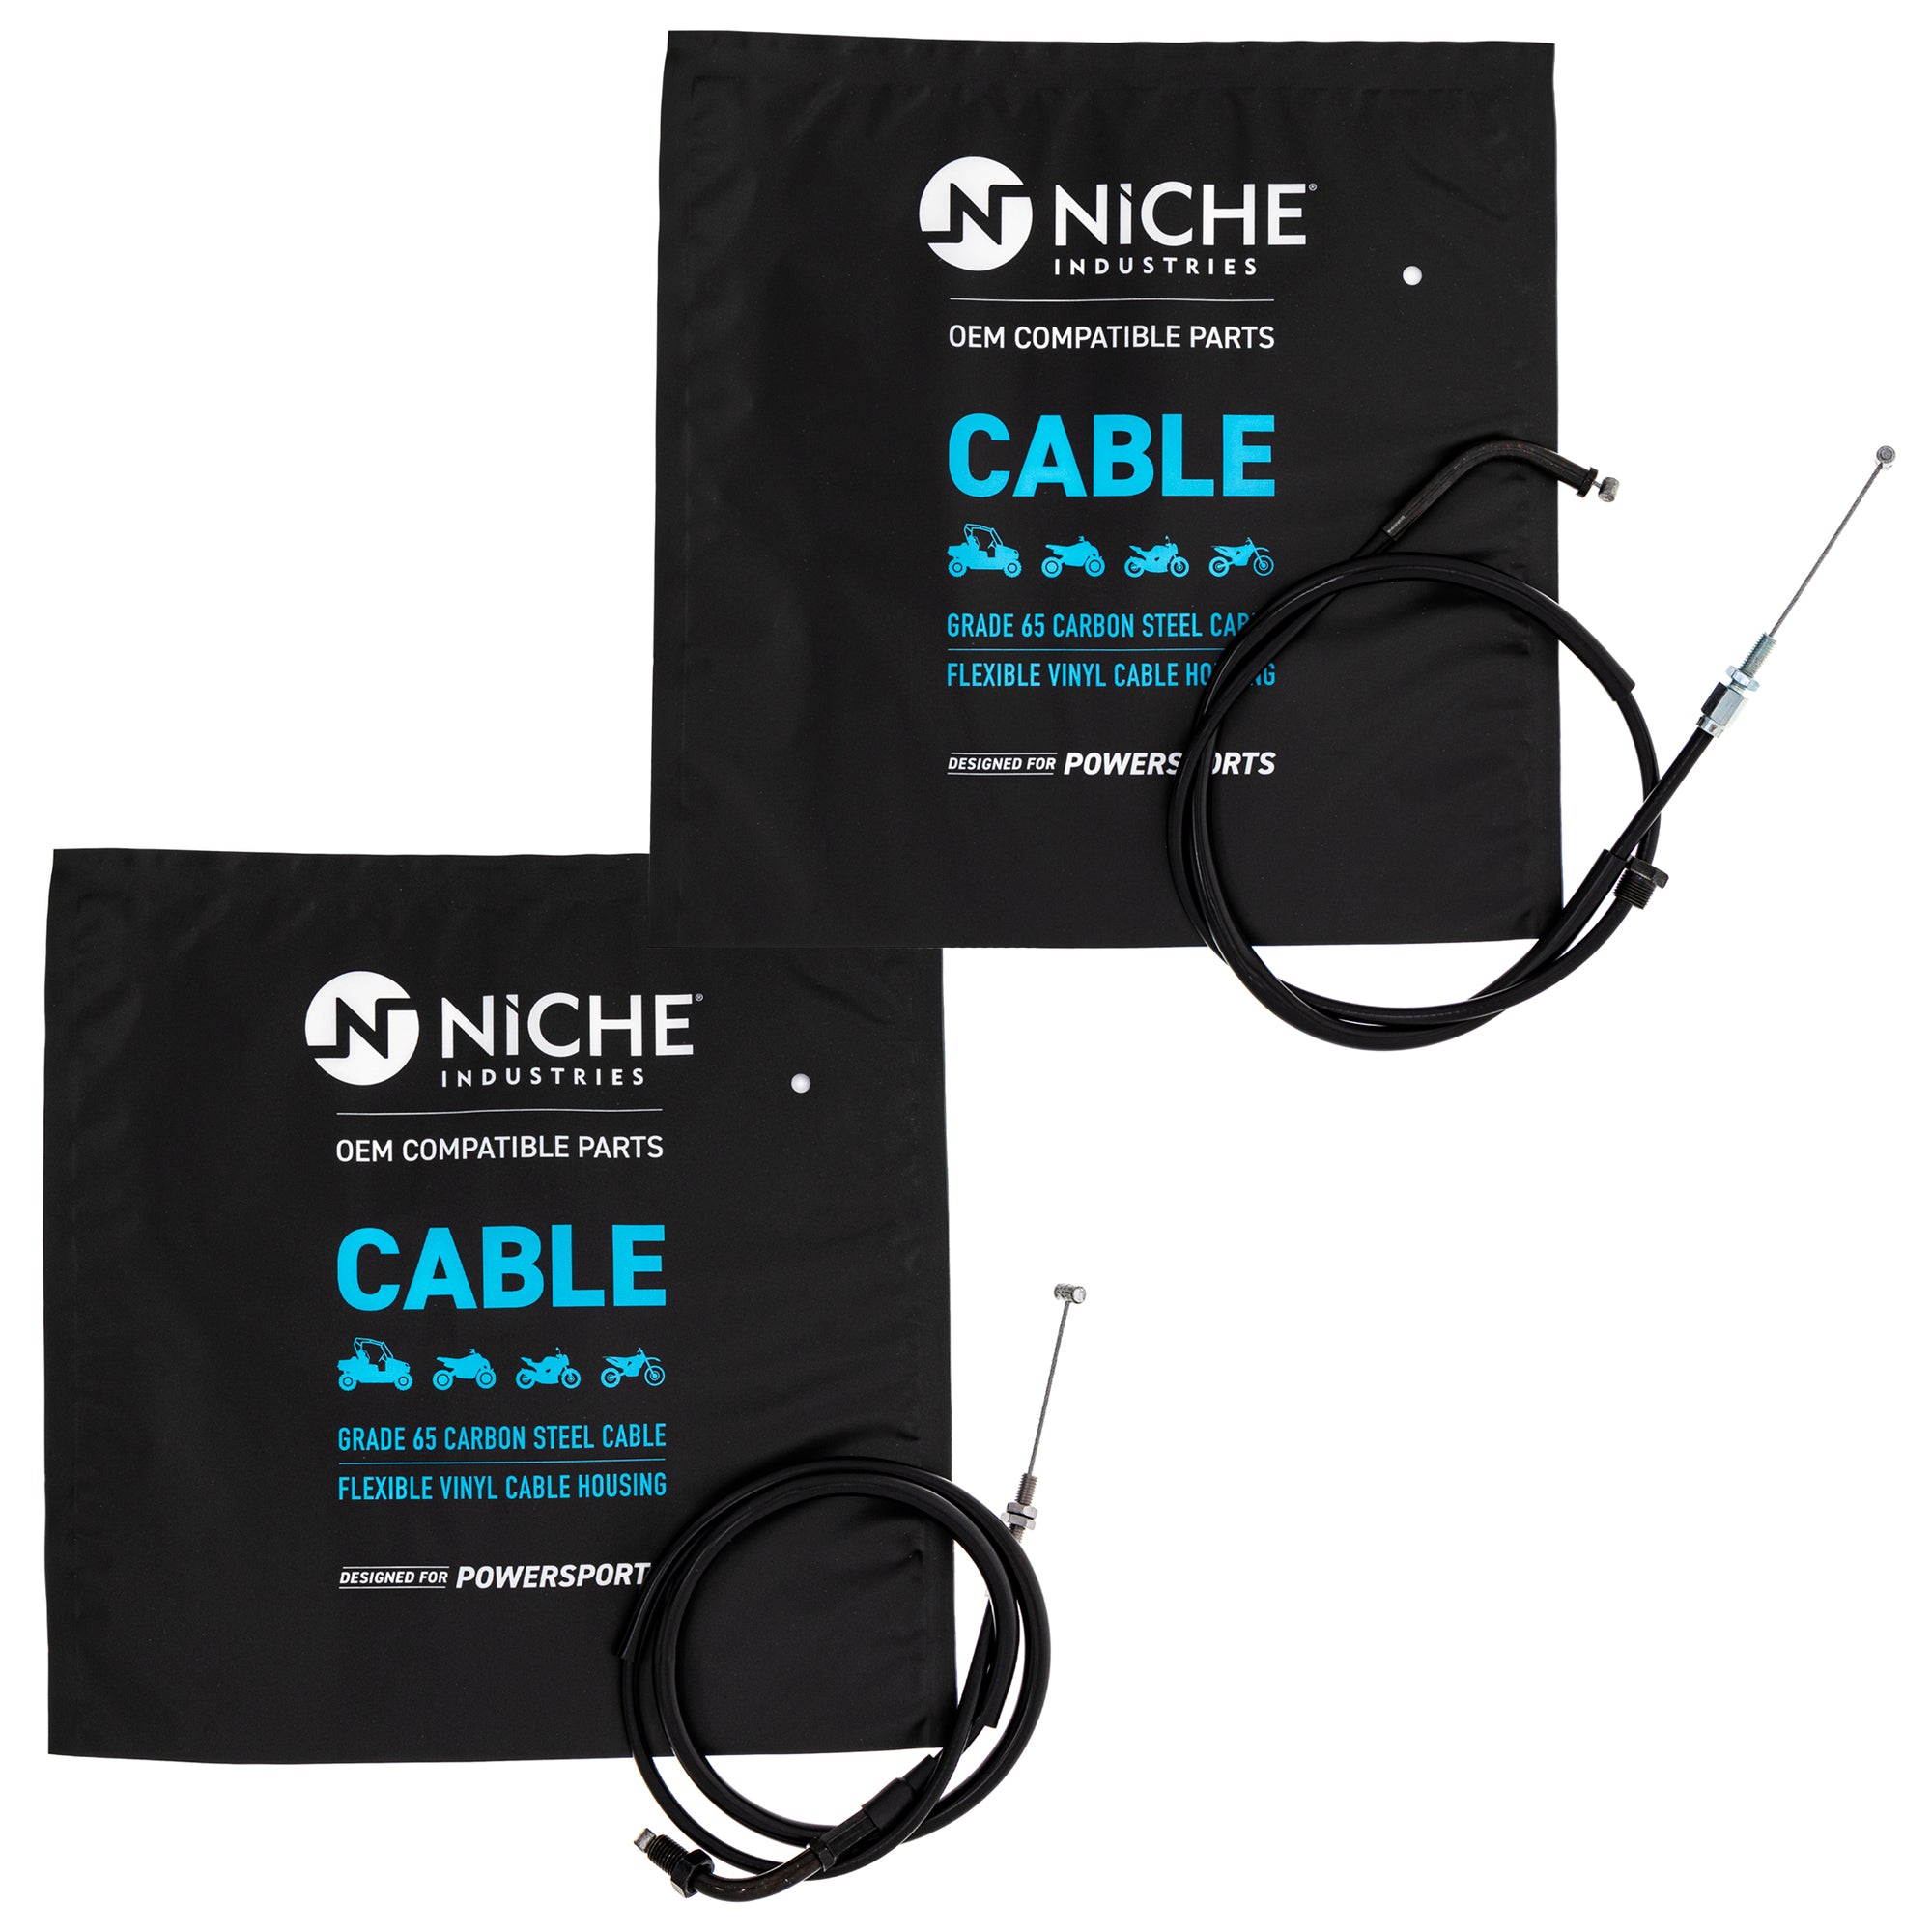 NICHE MK1005839 Throttle Cable Set for zOTHER Super CB750 CB550